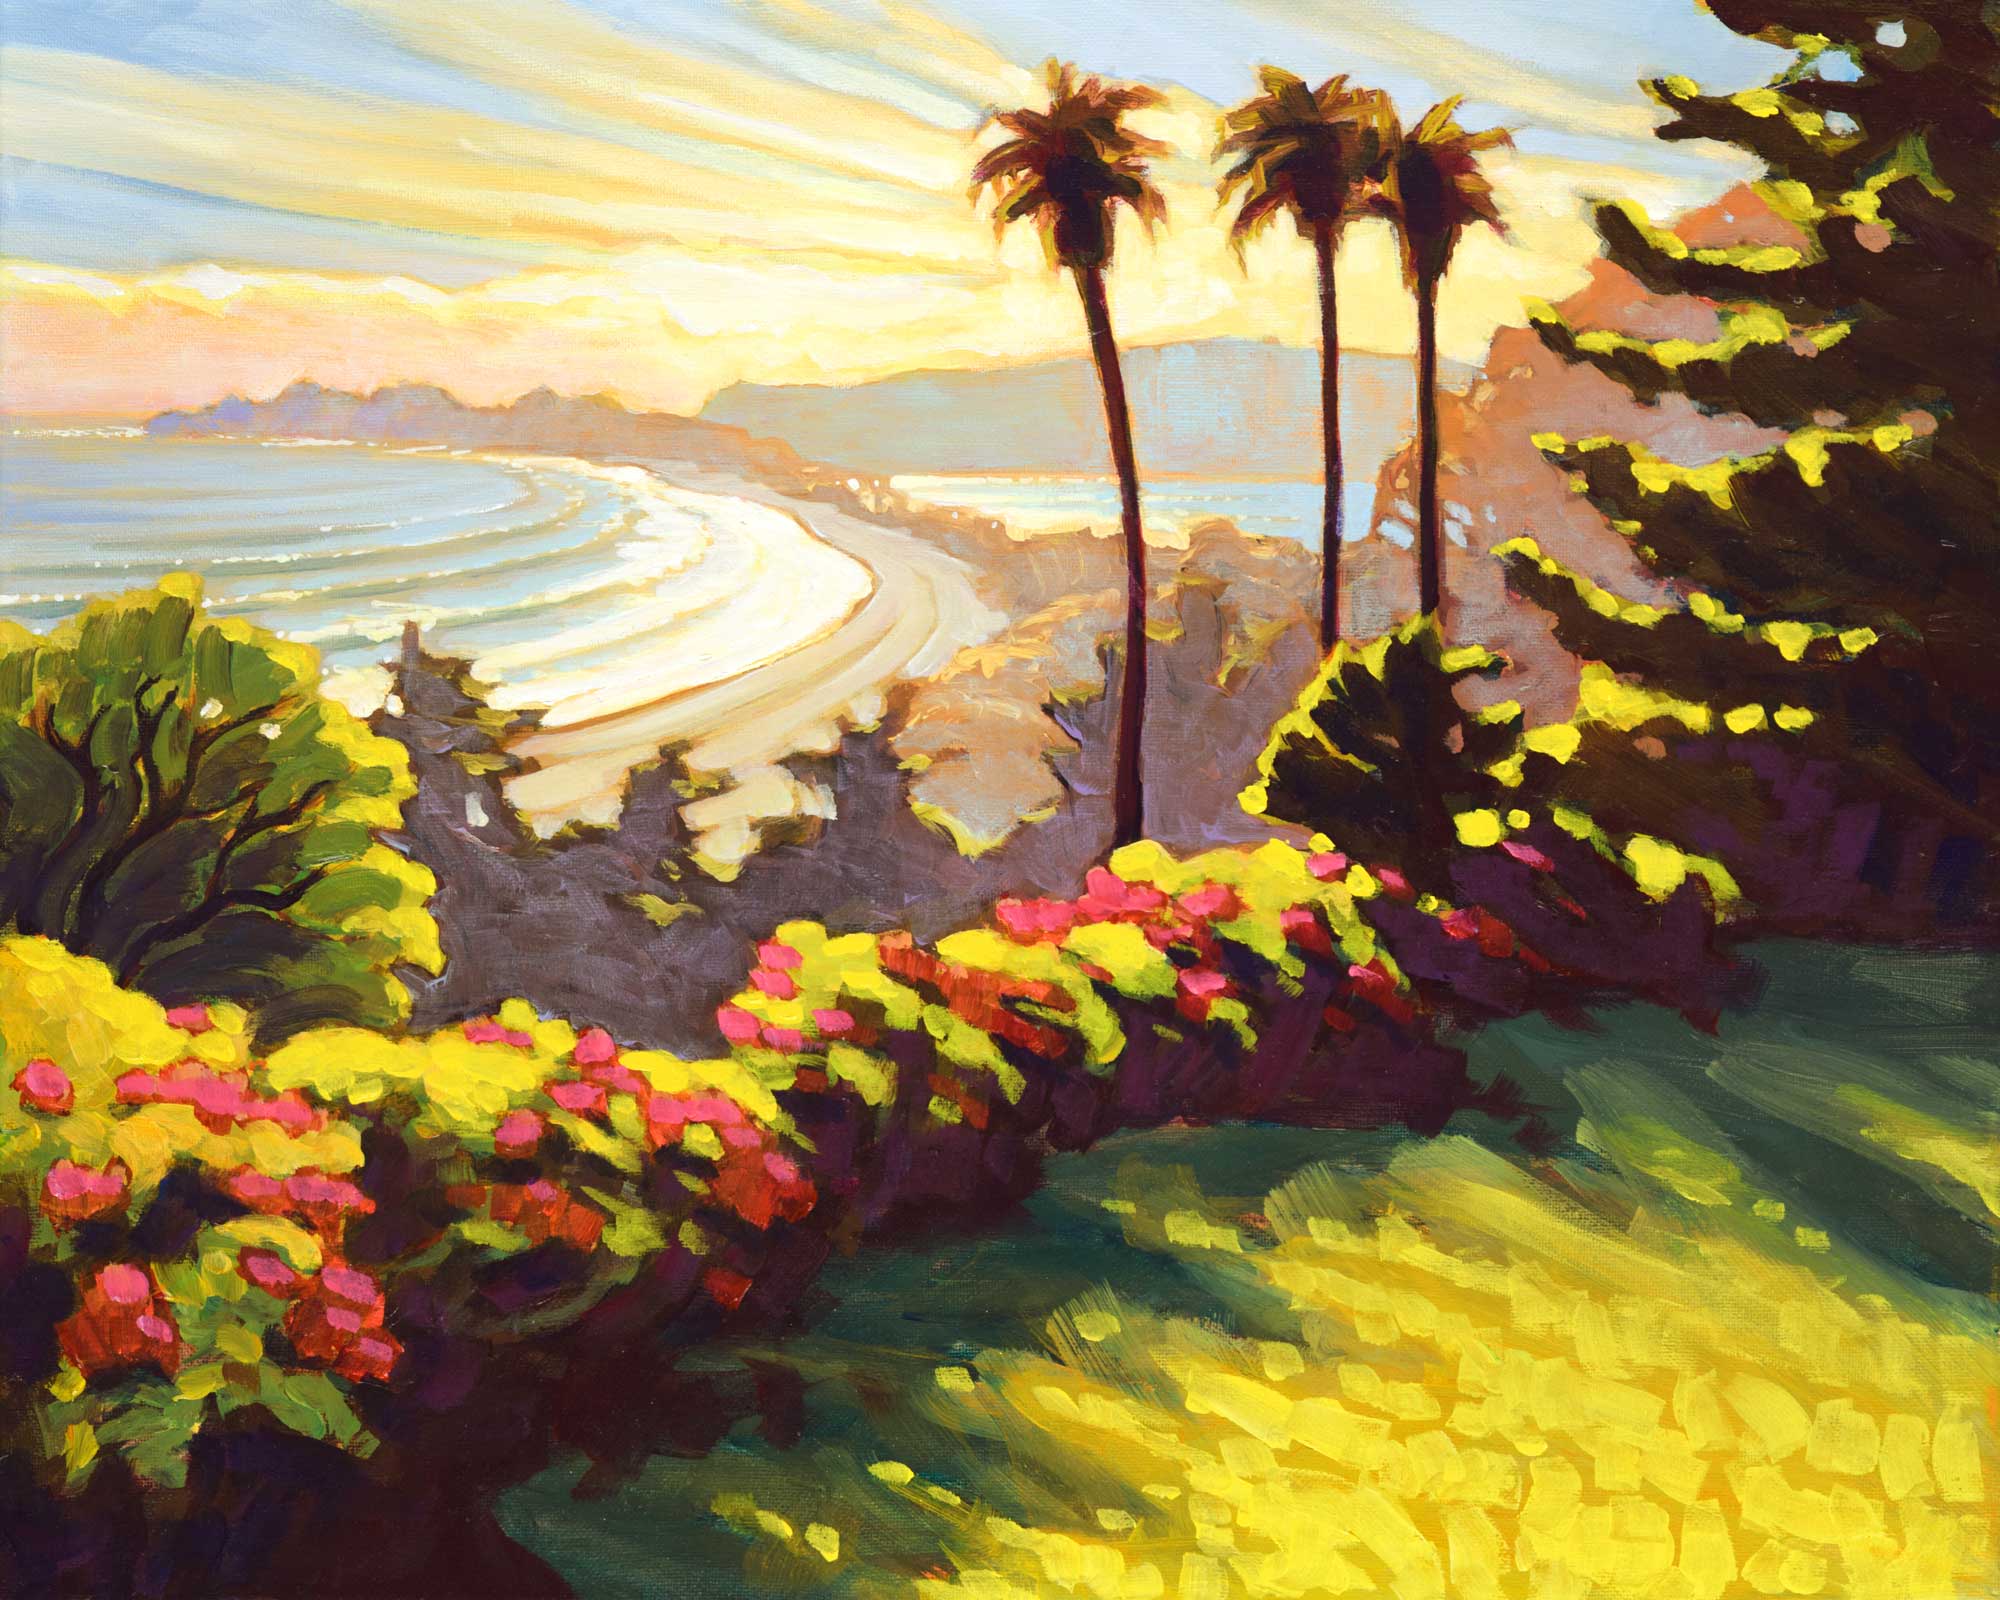 Plein air painting of Stinson Beach and Bolinas Lagoon on the Marin coast of northern California